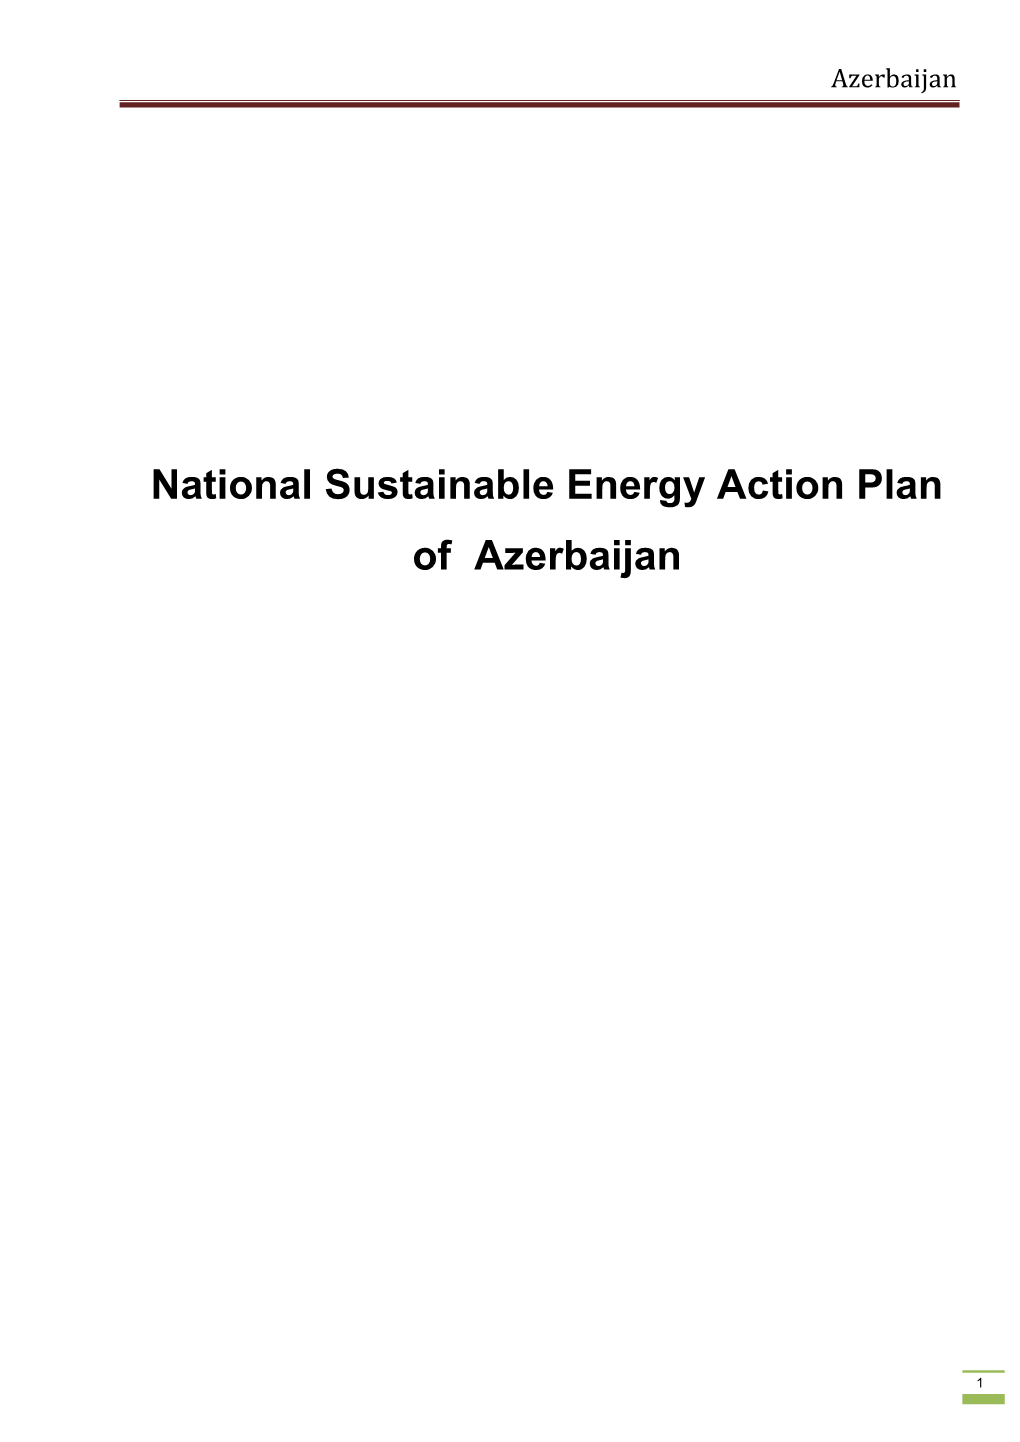 National Sustainable Energy Action Plan of Azerbaijan